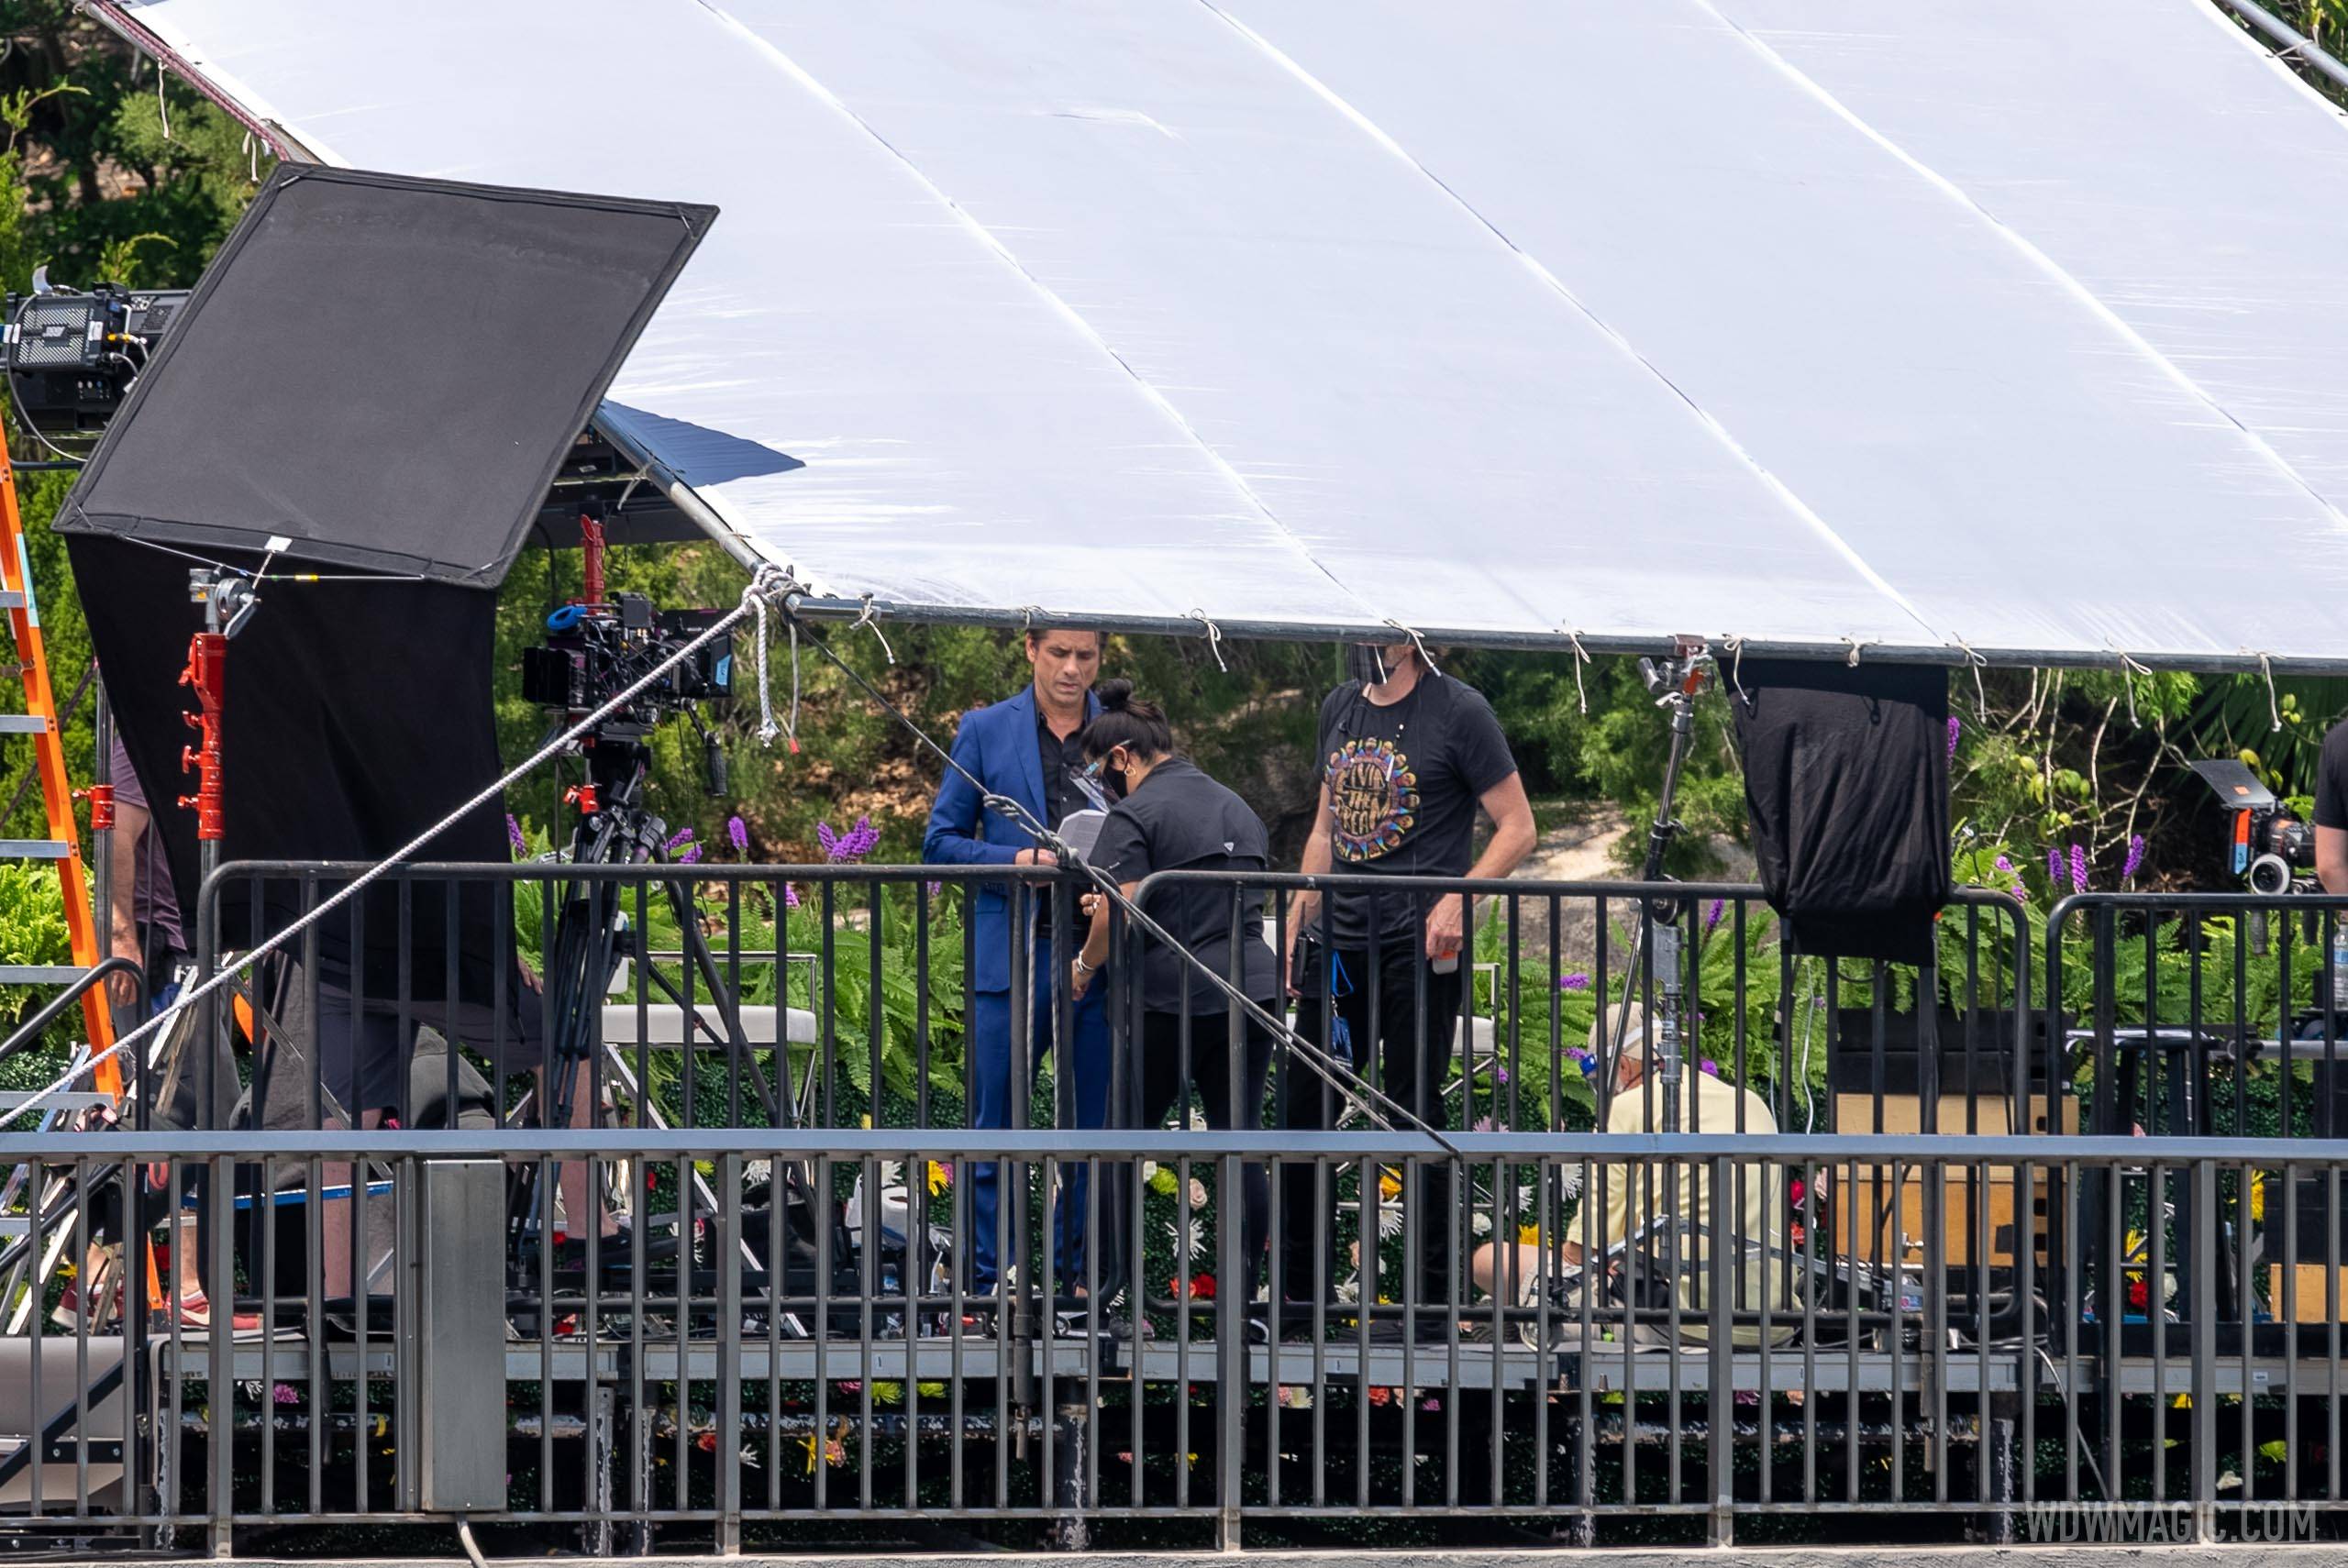 John Stamos at Magic Kingdom as part of filming for American Idol Disney Night